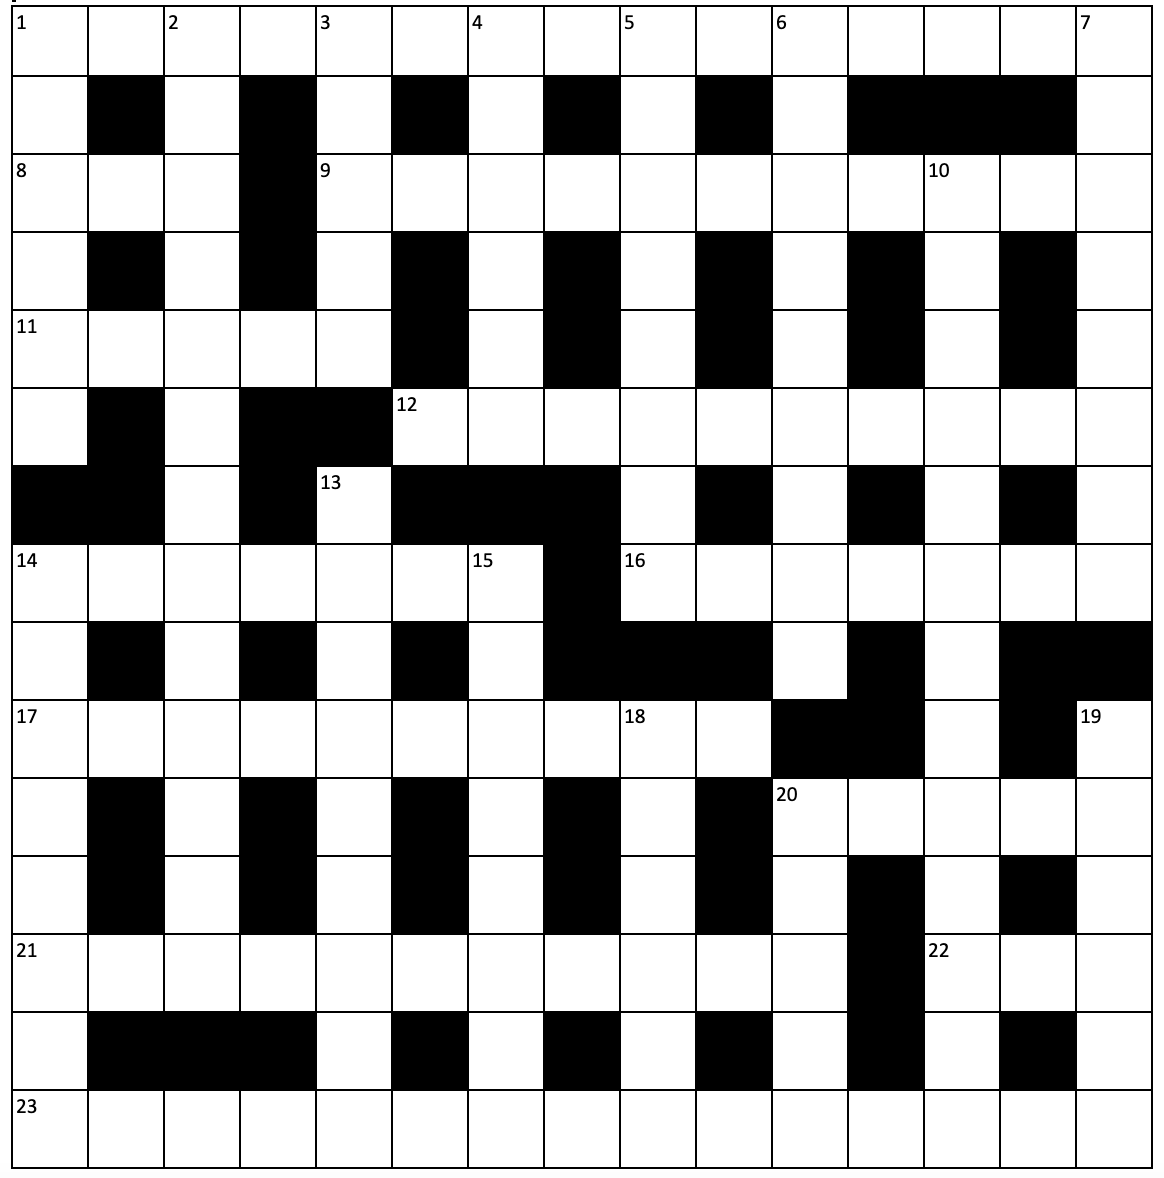 Cryptic crossword No. 18